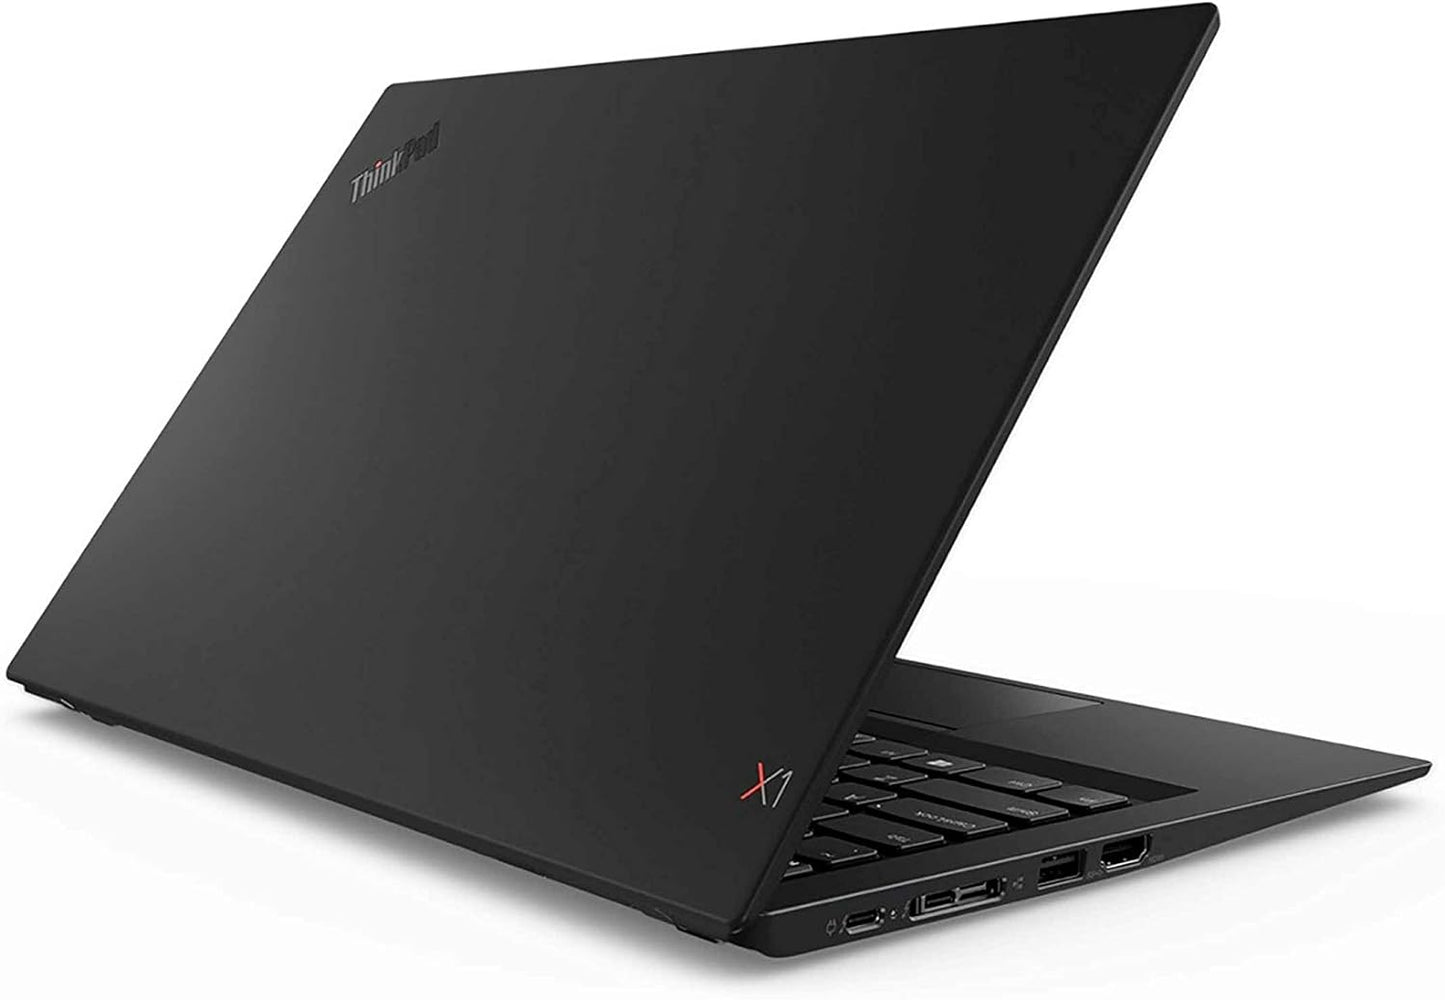 Lenovo ThinkPad X1 Carbon Ultrabook 6th Gen - 14" Touch Screen- Intel Core i7 8650U - 16GB RAM - 512GB SSD - Windows 10 pro - 20KH002EUS